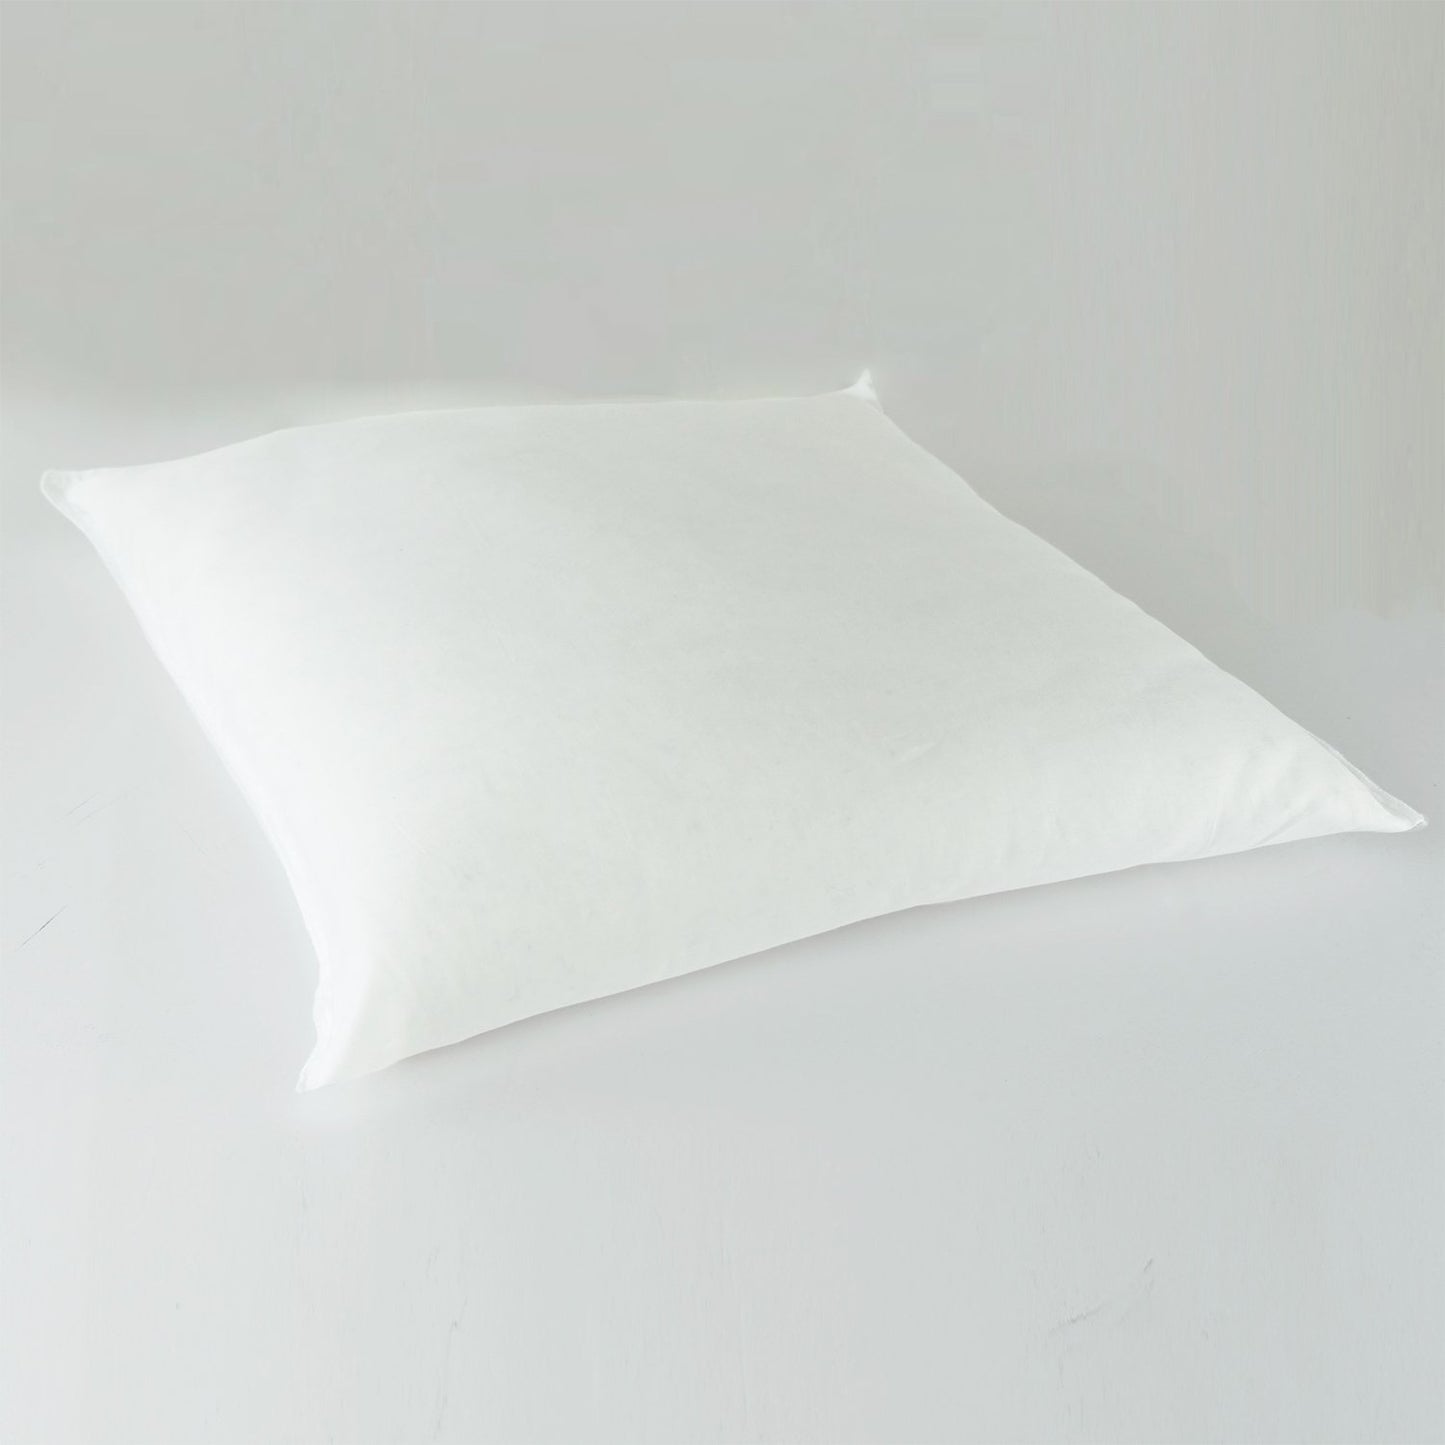 J-Life Fukurou Natural Zabuton Floor Pillow_Pillows & Shams_Zabuton Floor Pillows_100% Cotton_Reversible_Handmade